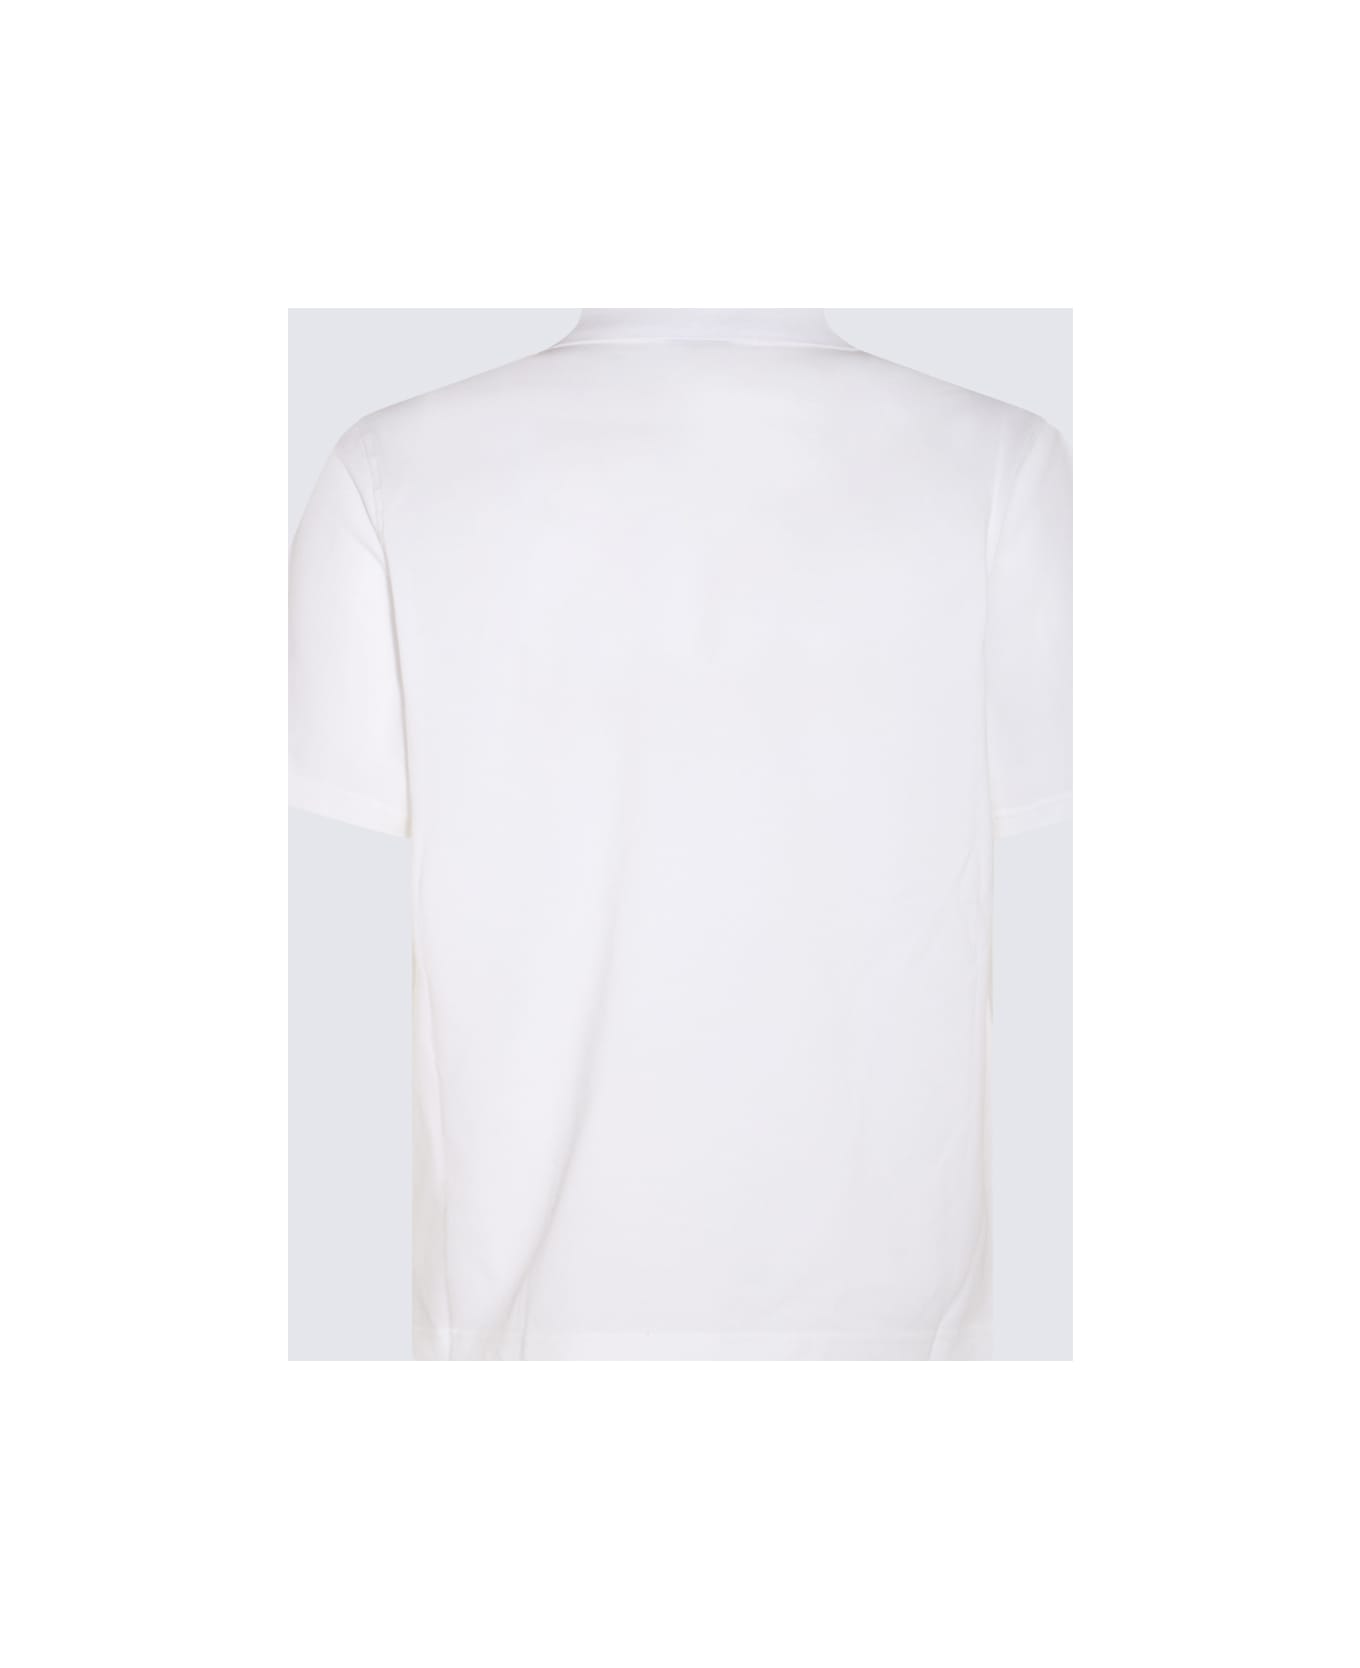 Lanvin White Cotton Polo Shirt - White